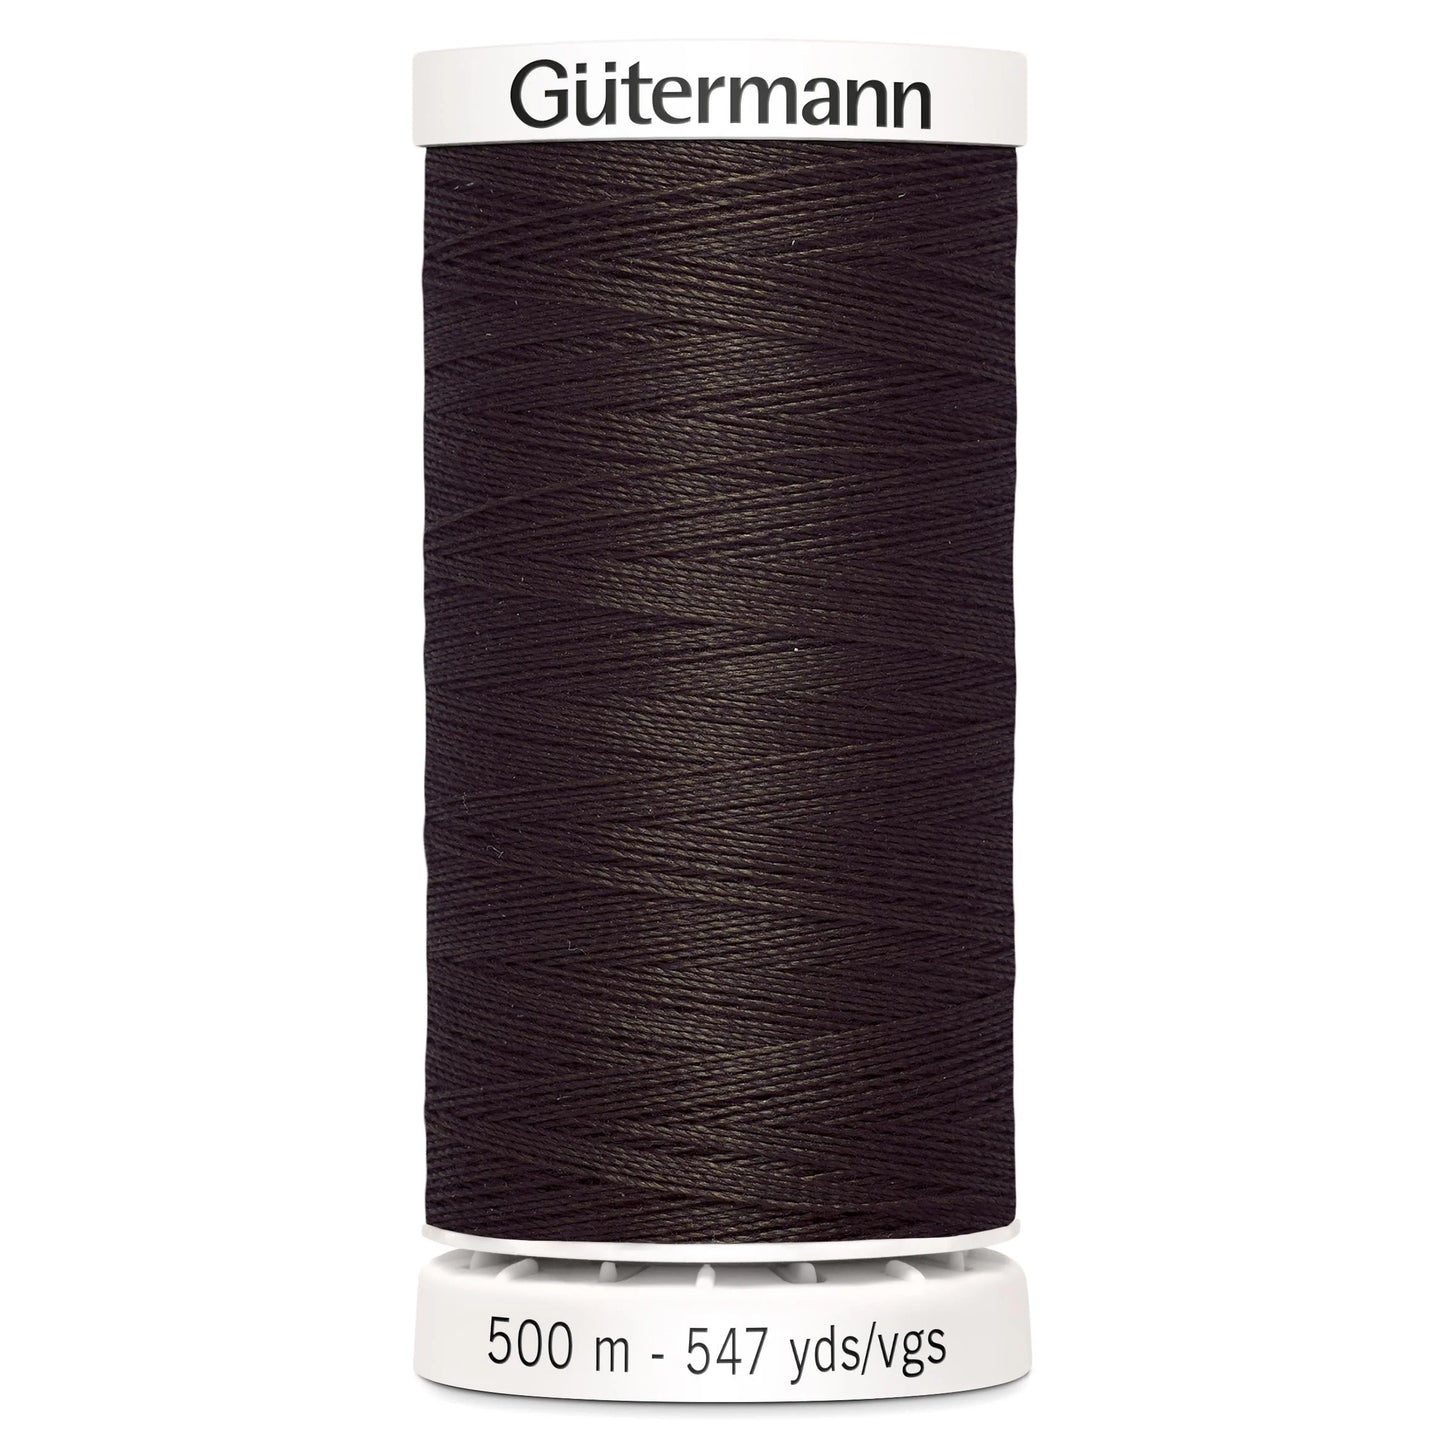 696 Gutermann Sew All Thread 500m - Mahogany